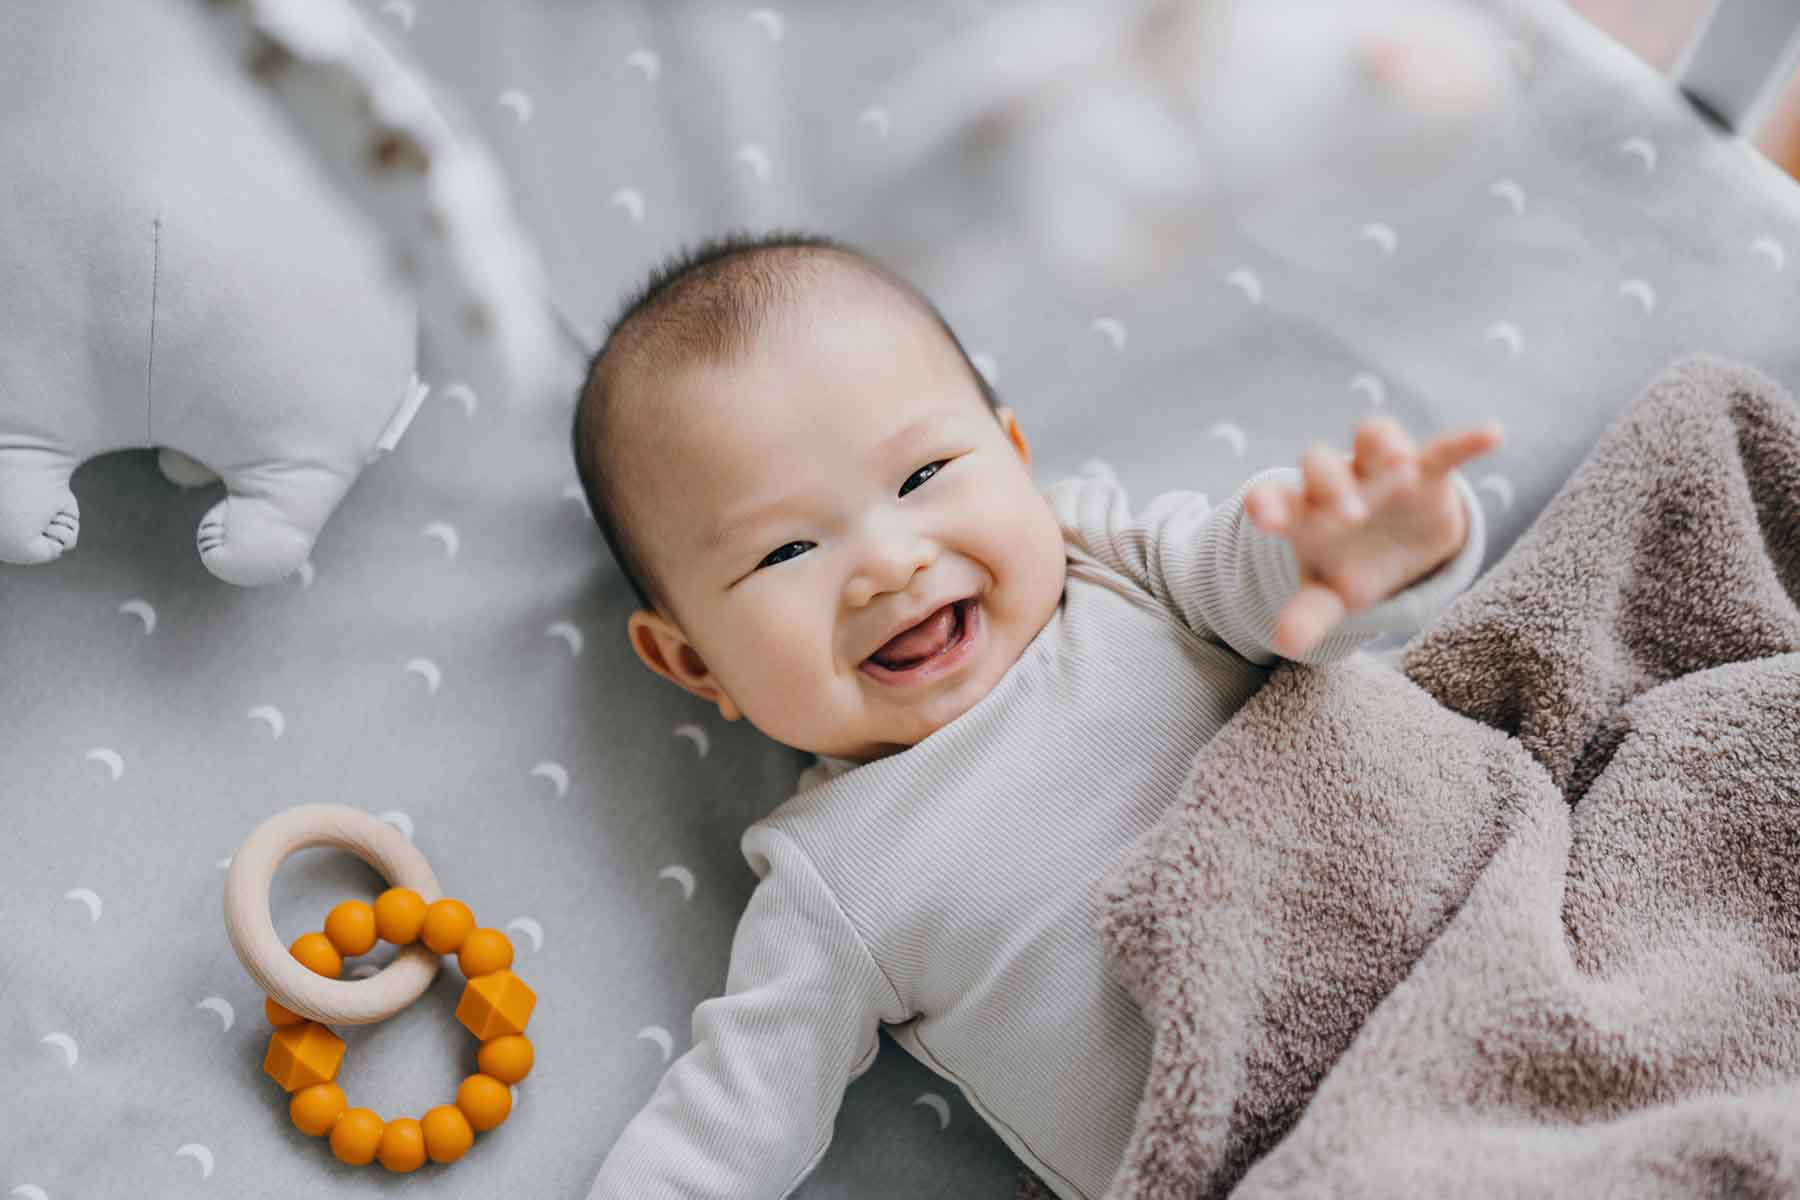 A smiling baby reaches toward the camera